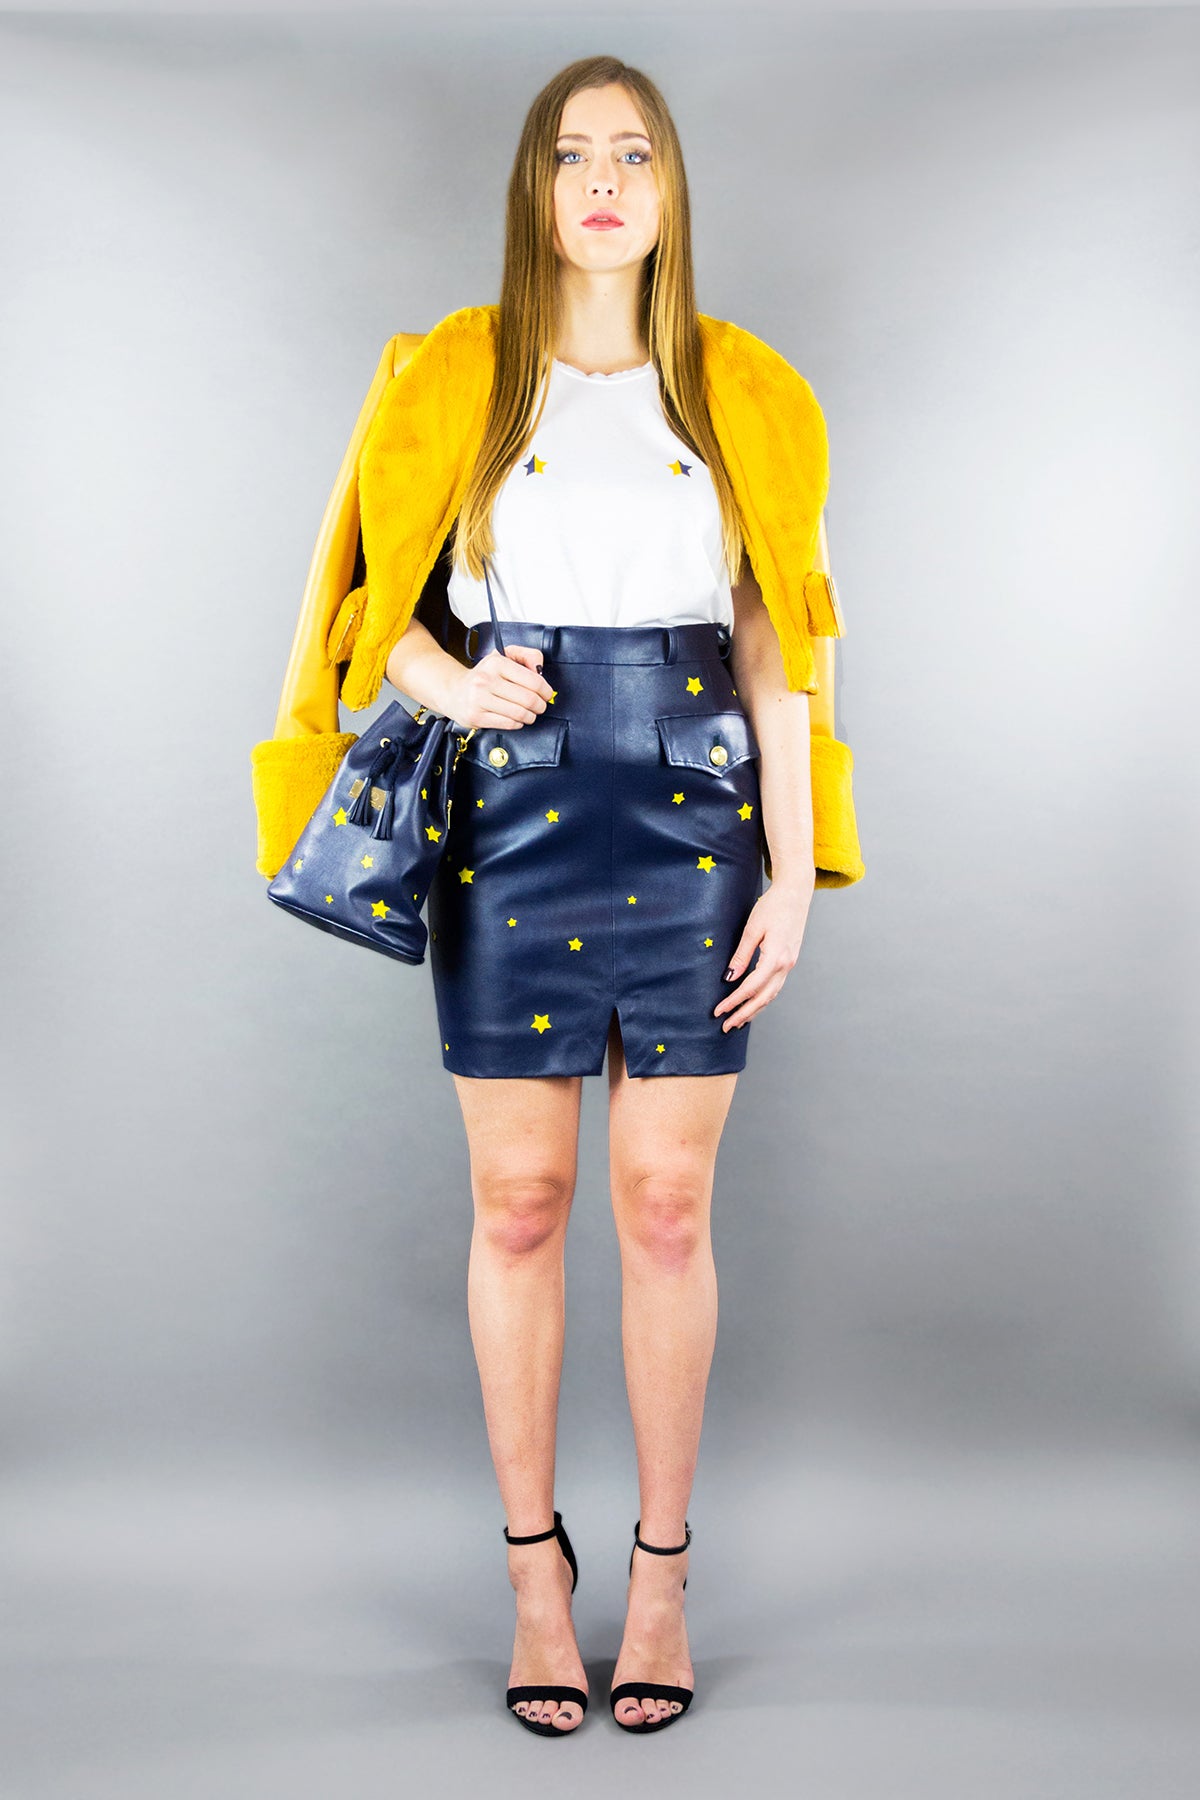 Military Skirt in Imitation Leather "STARS" - Night Blue - Manuel Essl Design